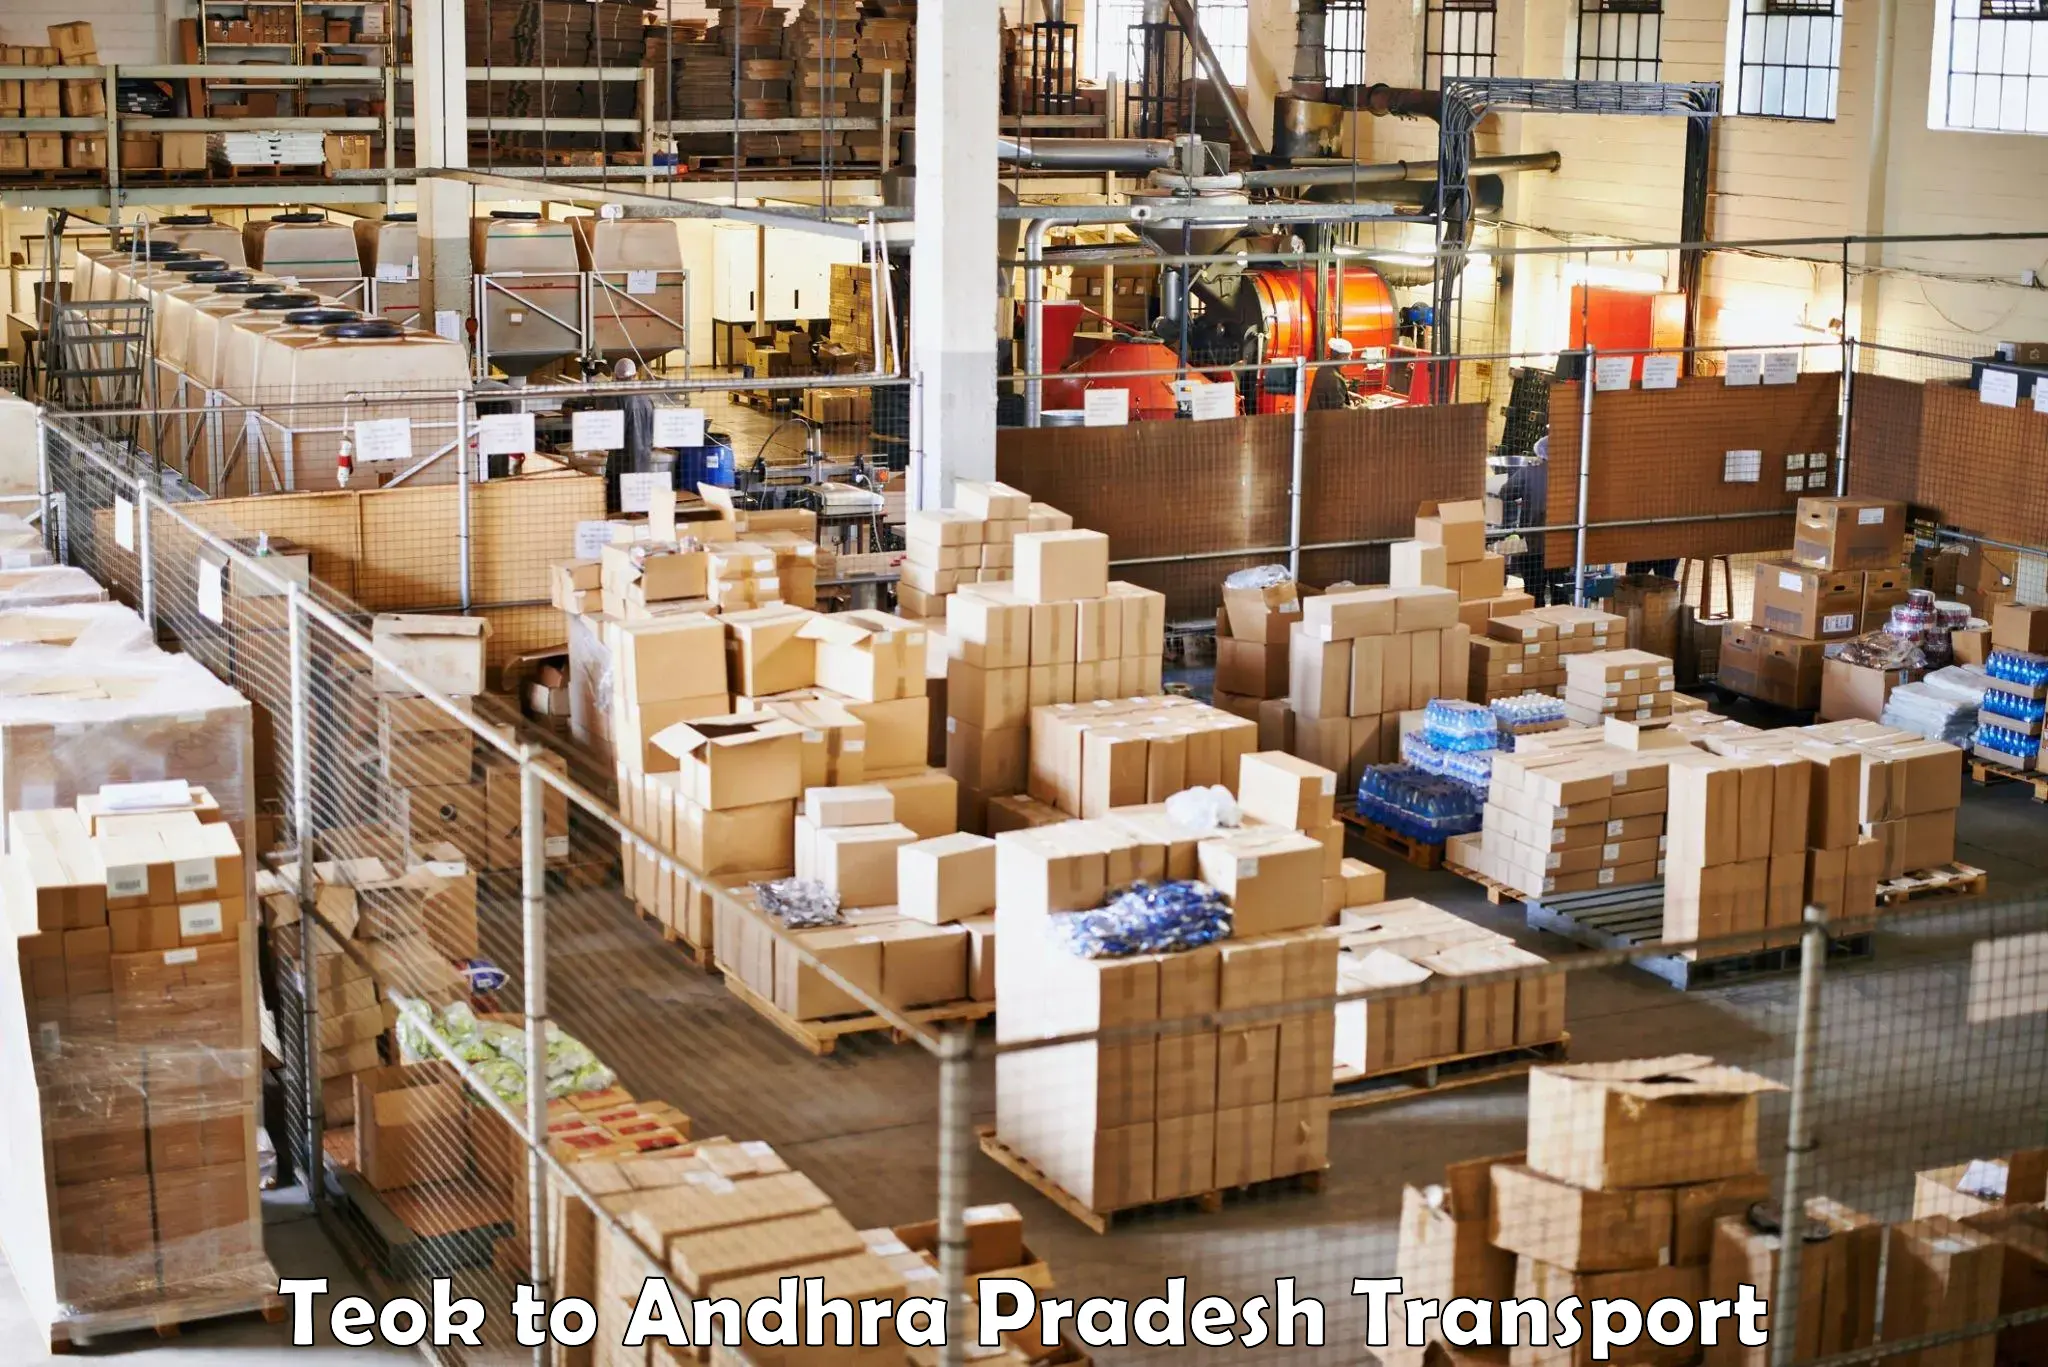 Nearby transport service Teok to Andhra Pradesh